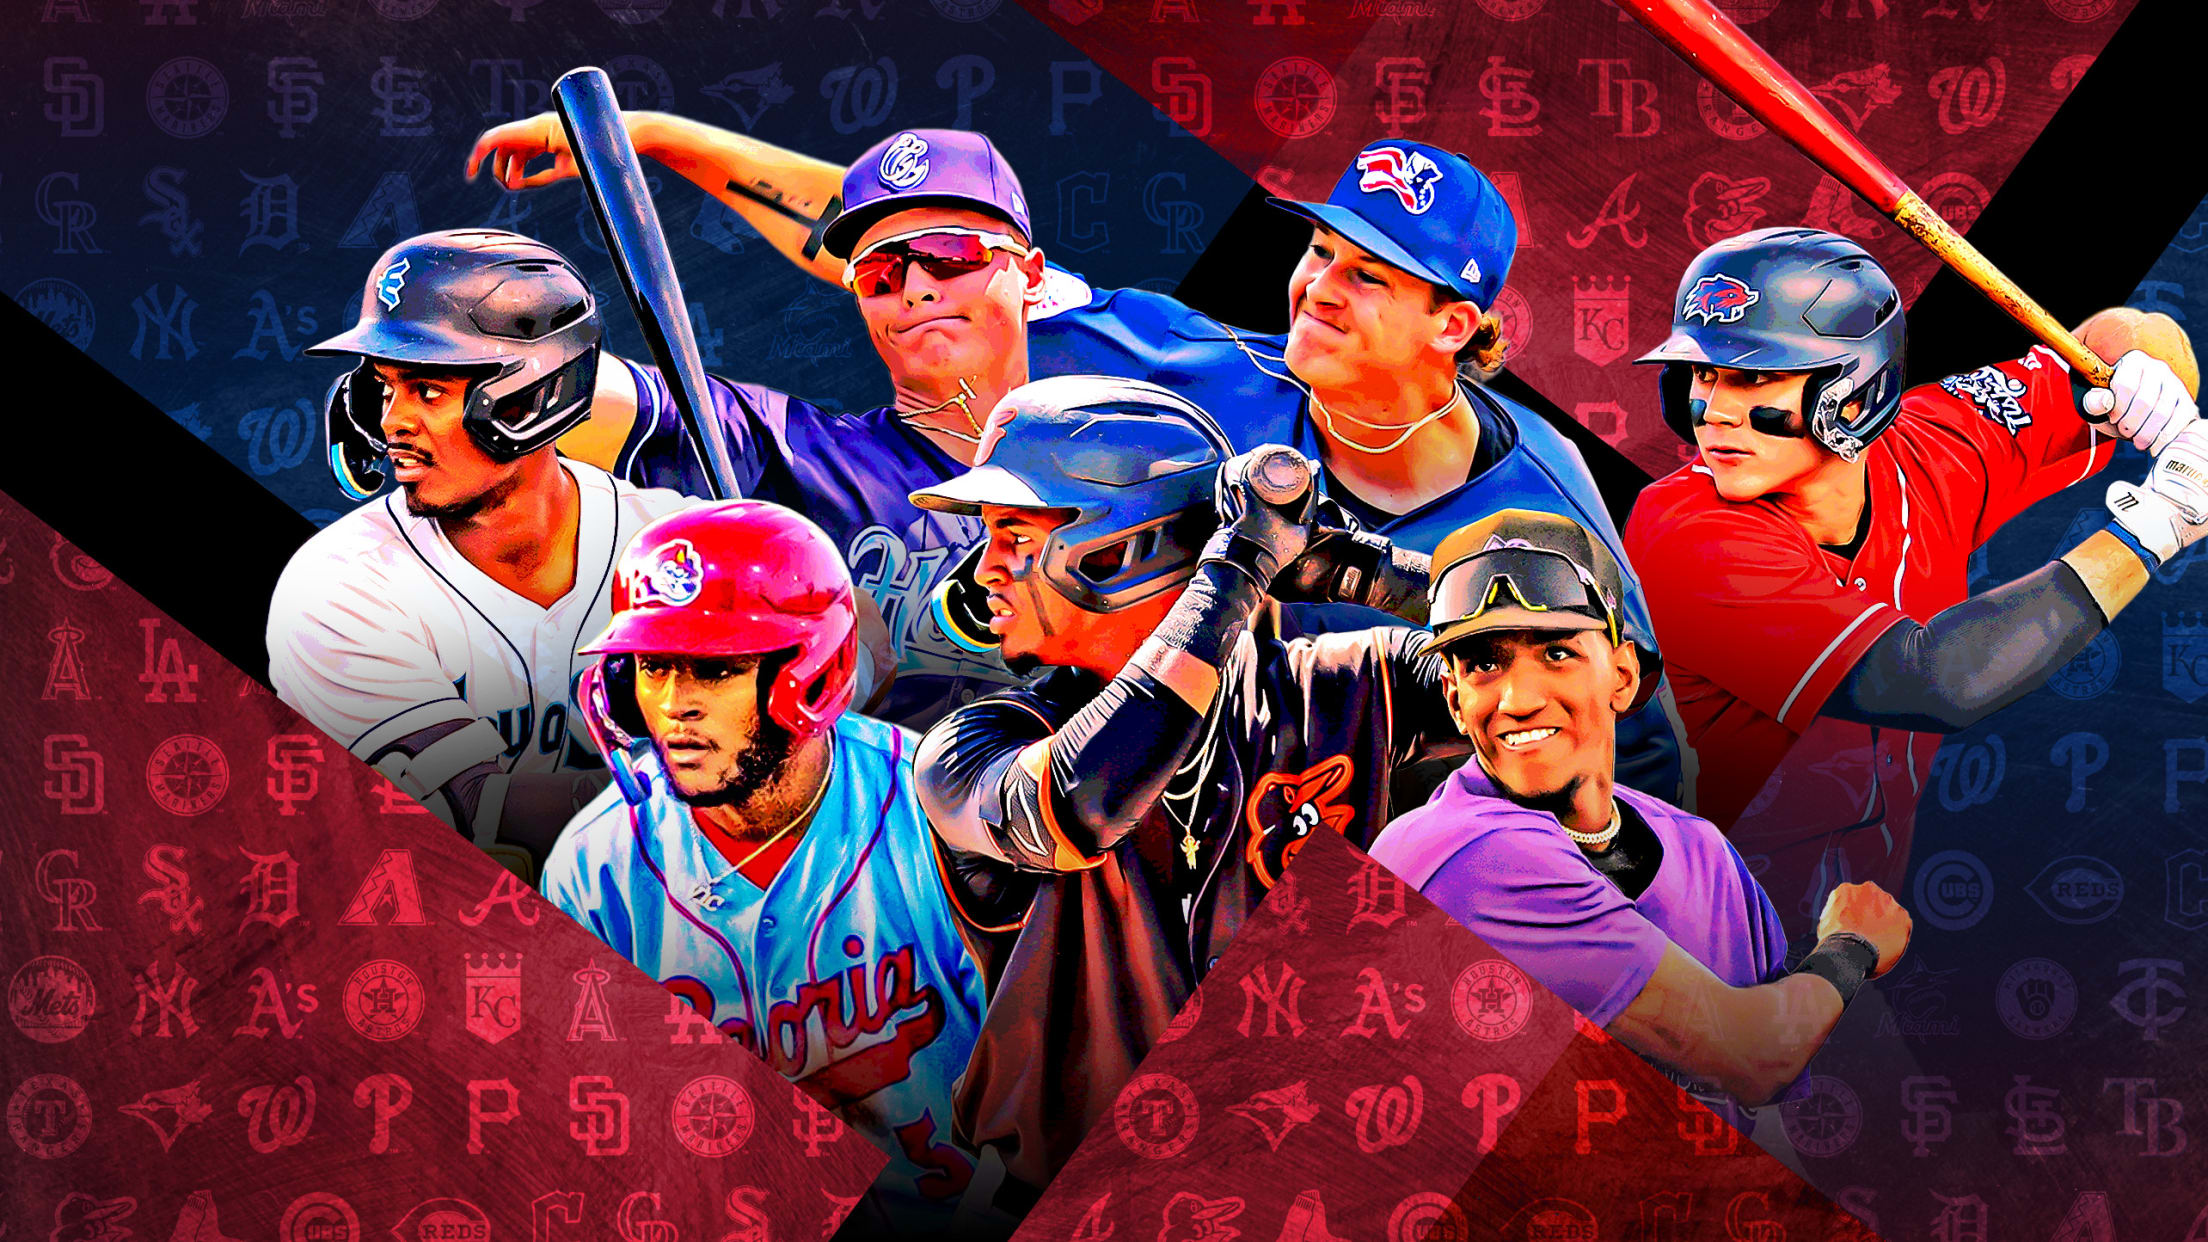 A photo illustration of seven Minor League prospects